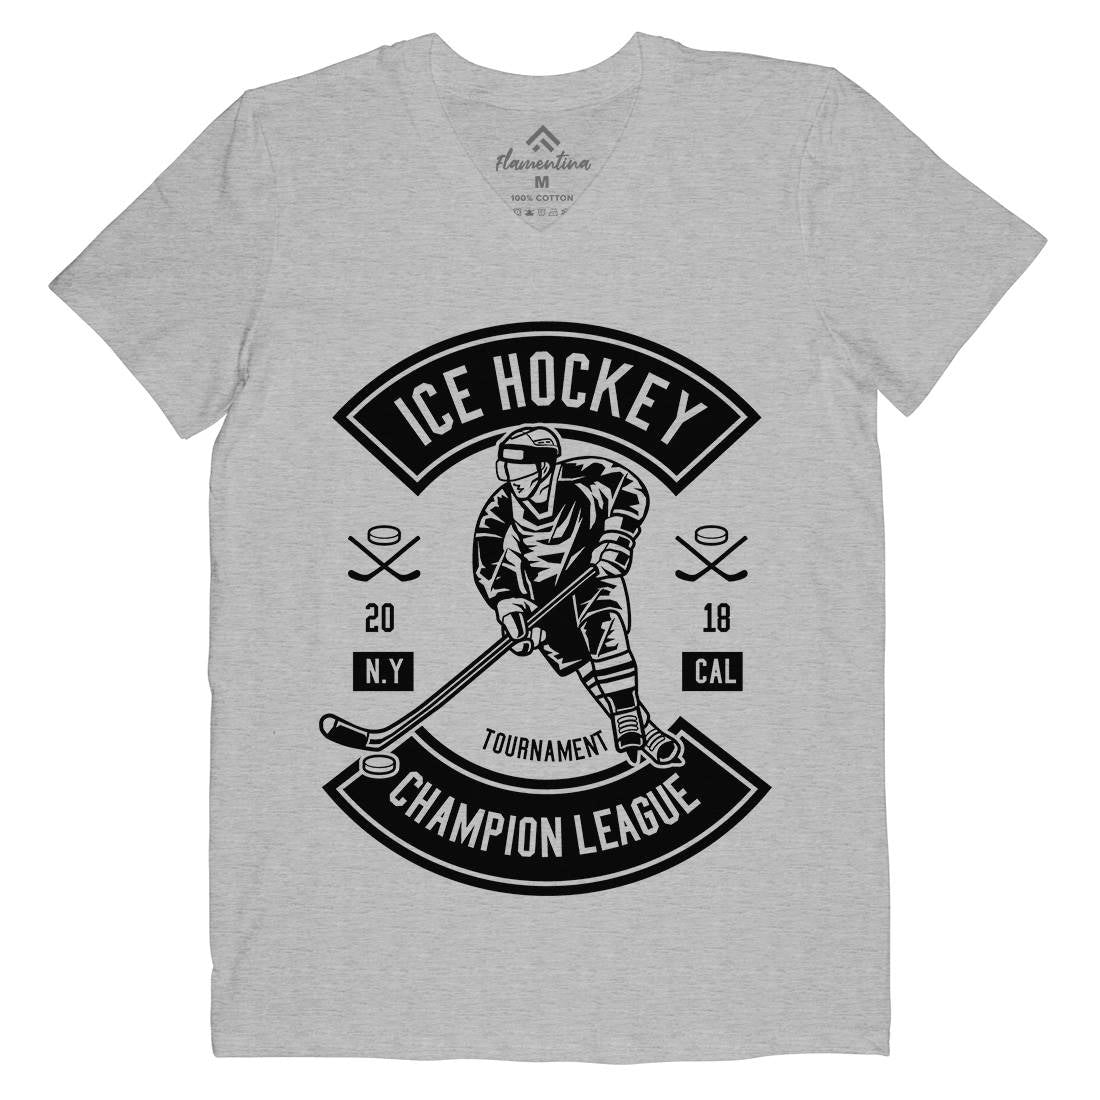 Ice Hockey Champion League Mens V-Neck T-Shirt Sport B564